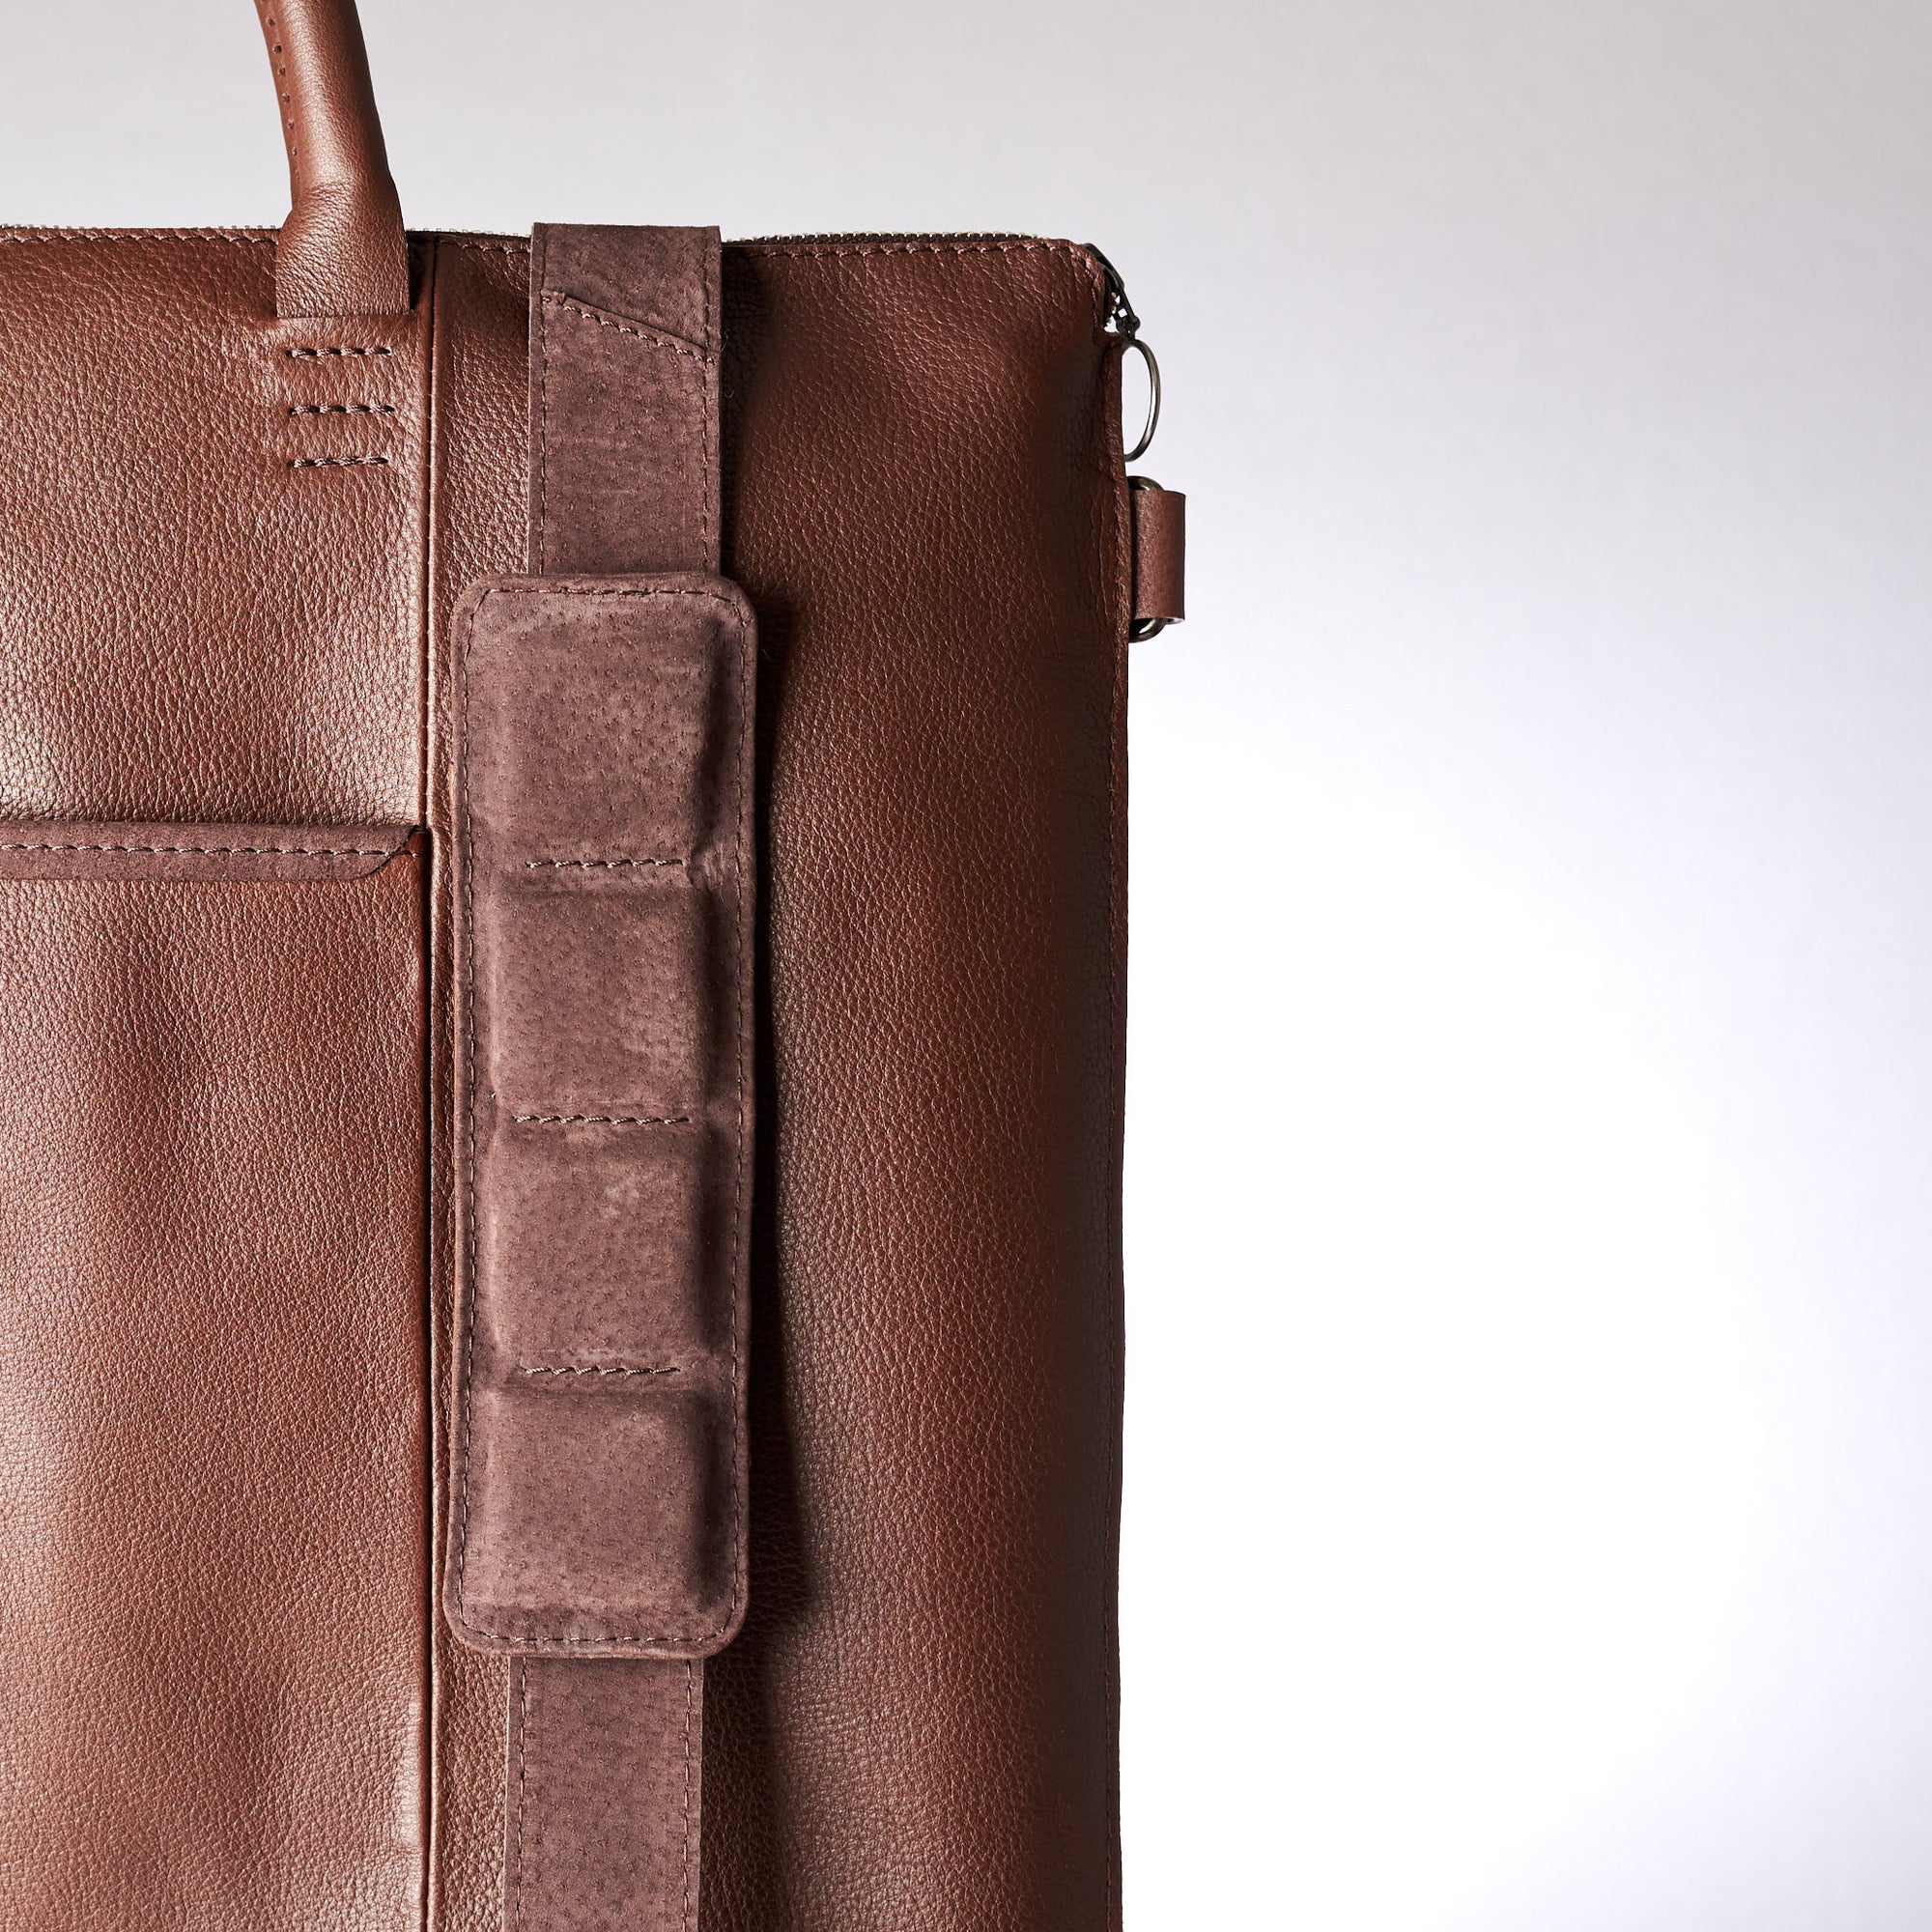 Padded shoulder strap. Brown tote zipper bag by Capra Leather. Handmade men work bag.